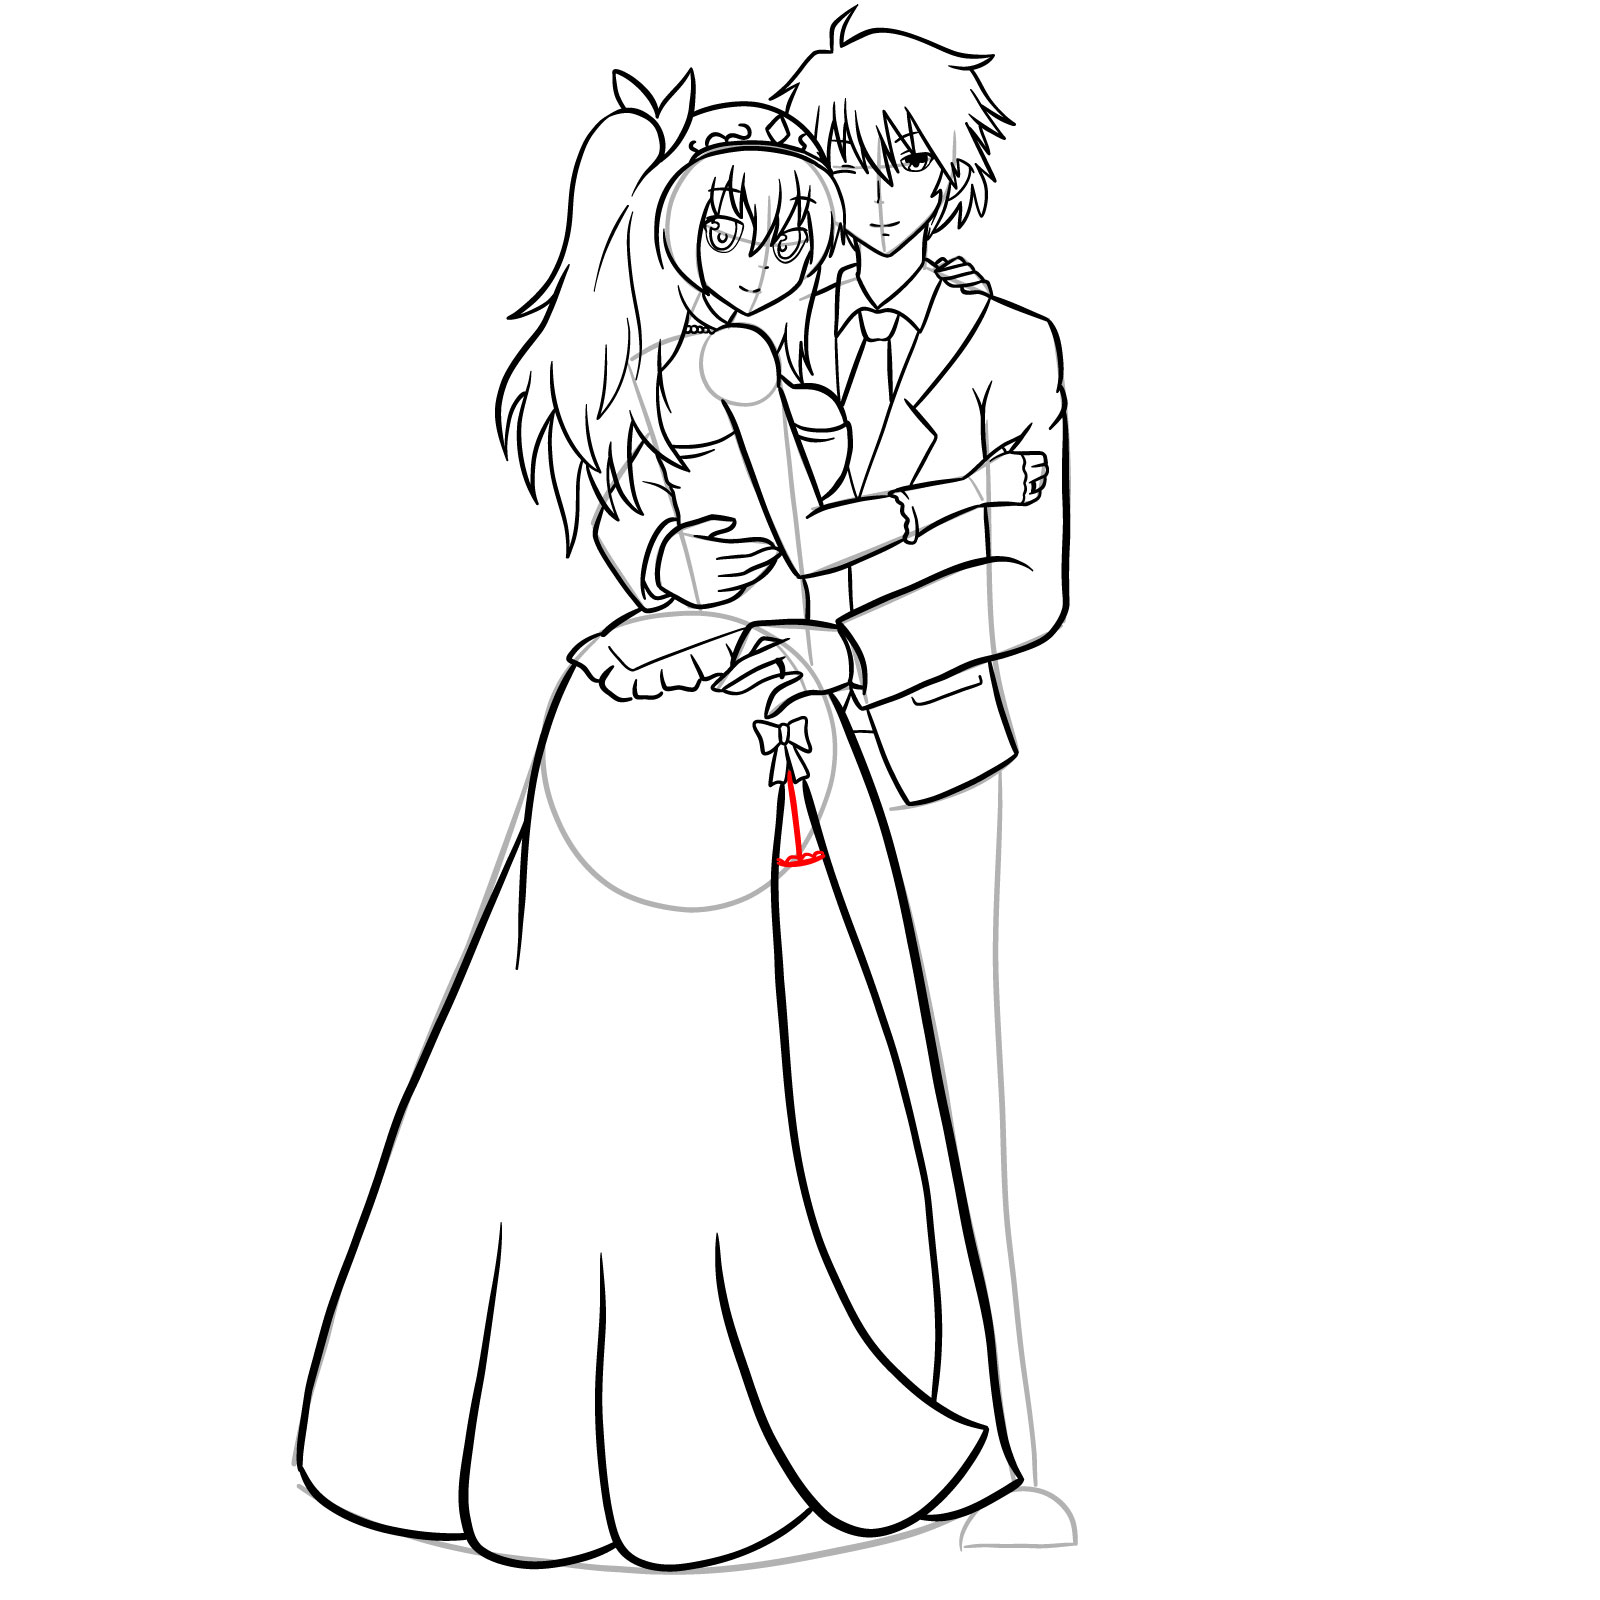 How to draw Ikki and Stella's wedding - step 52